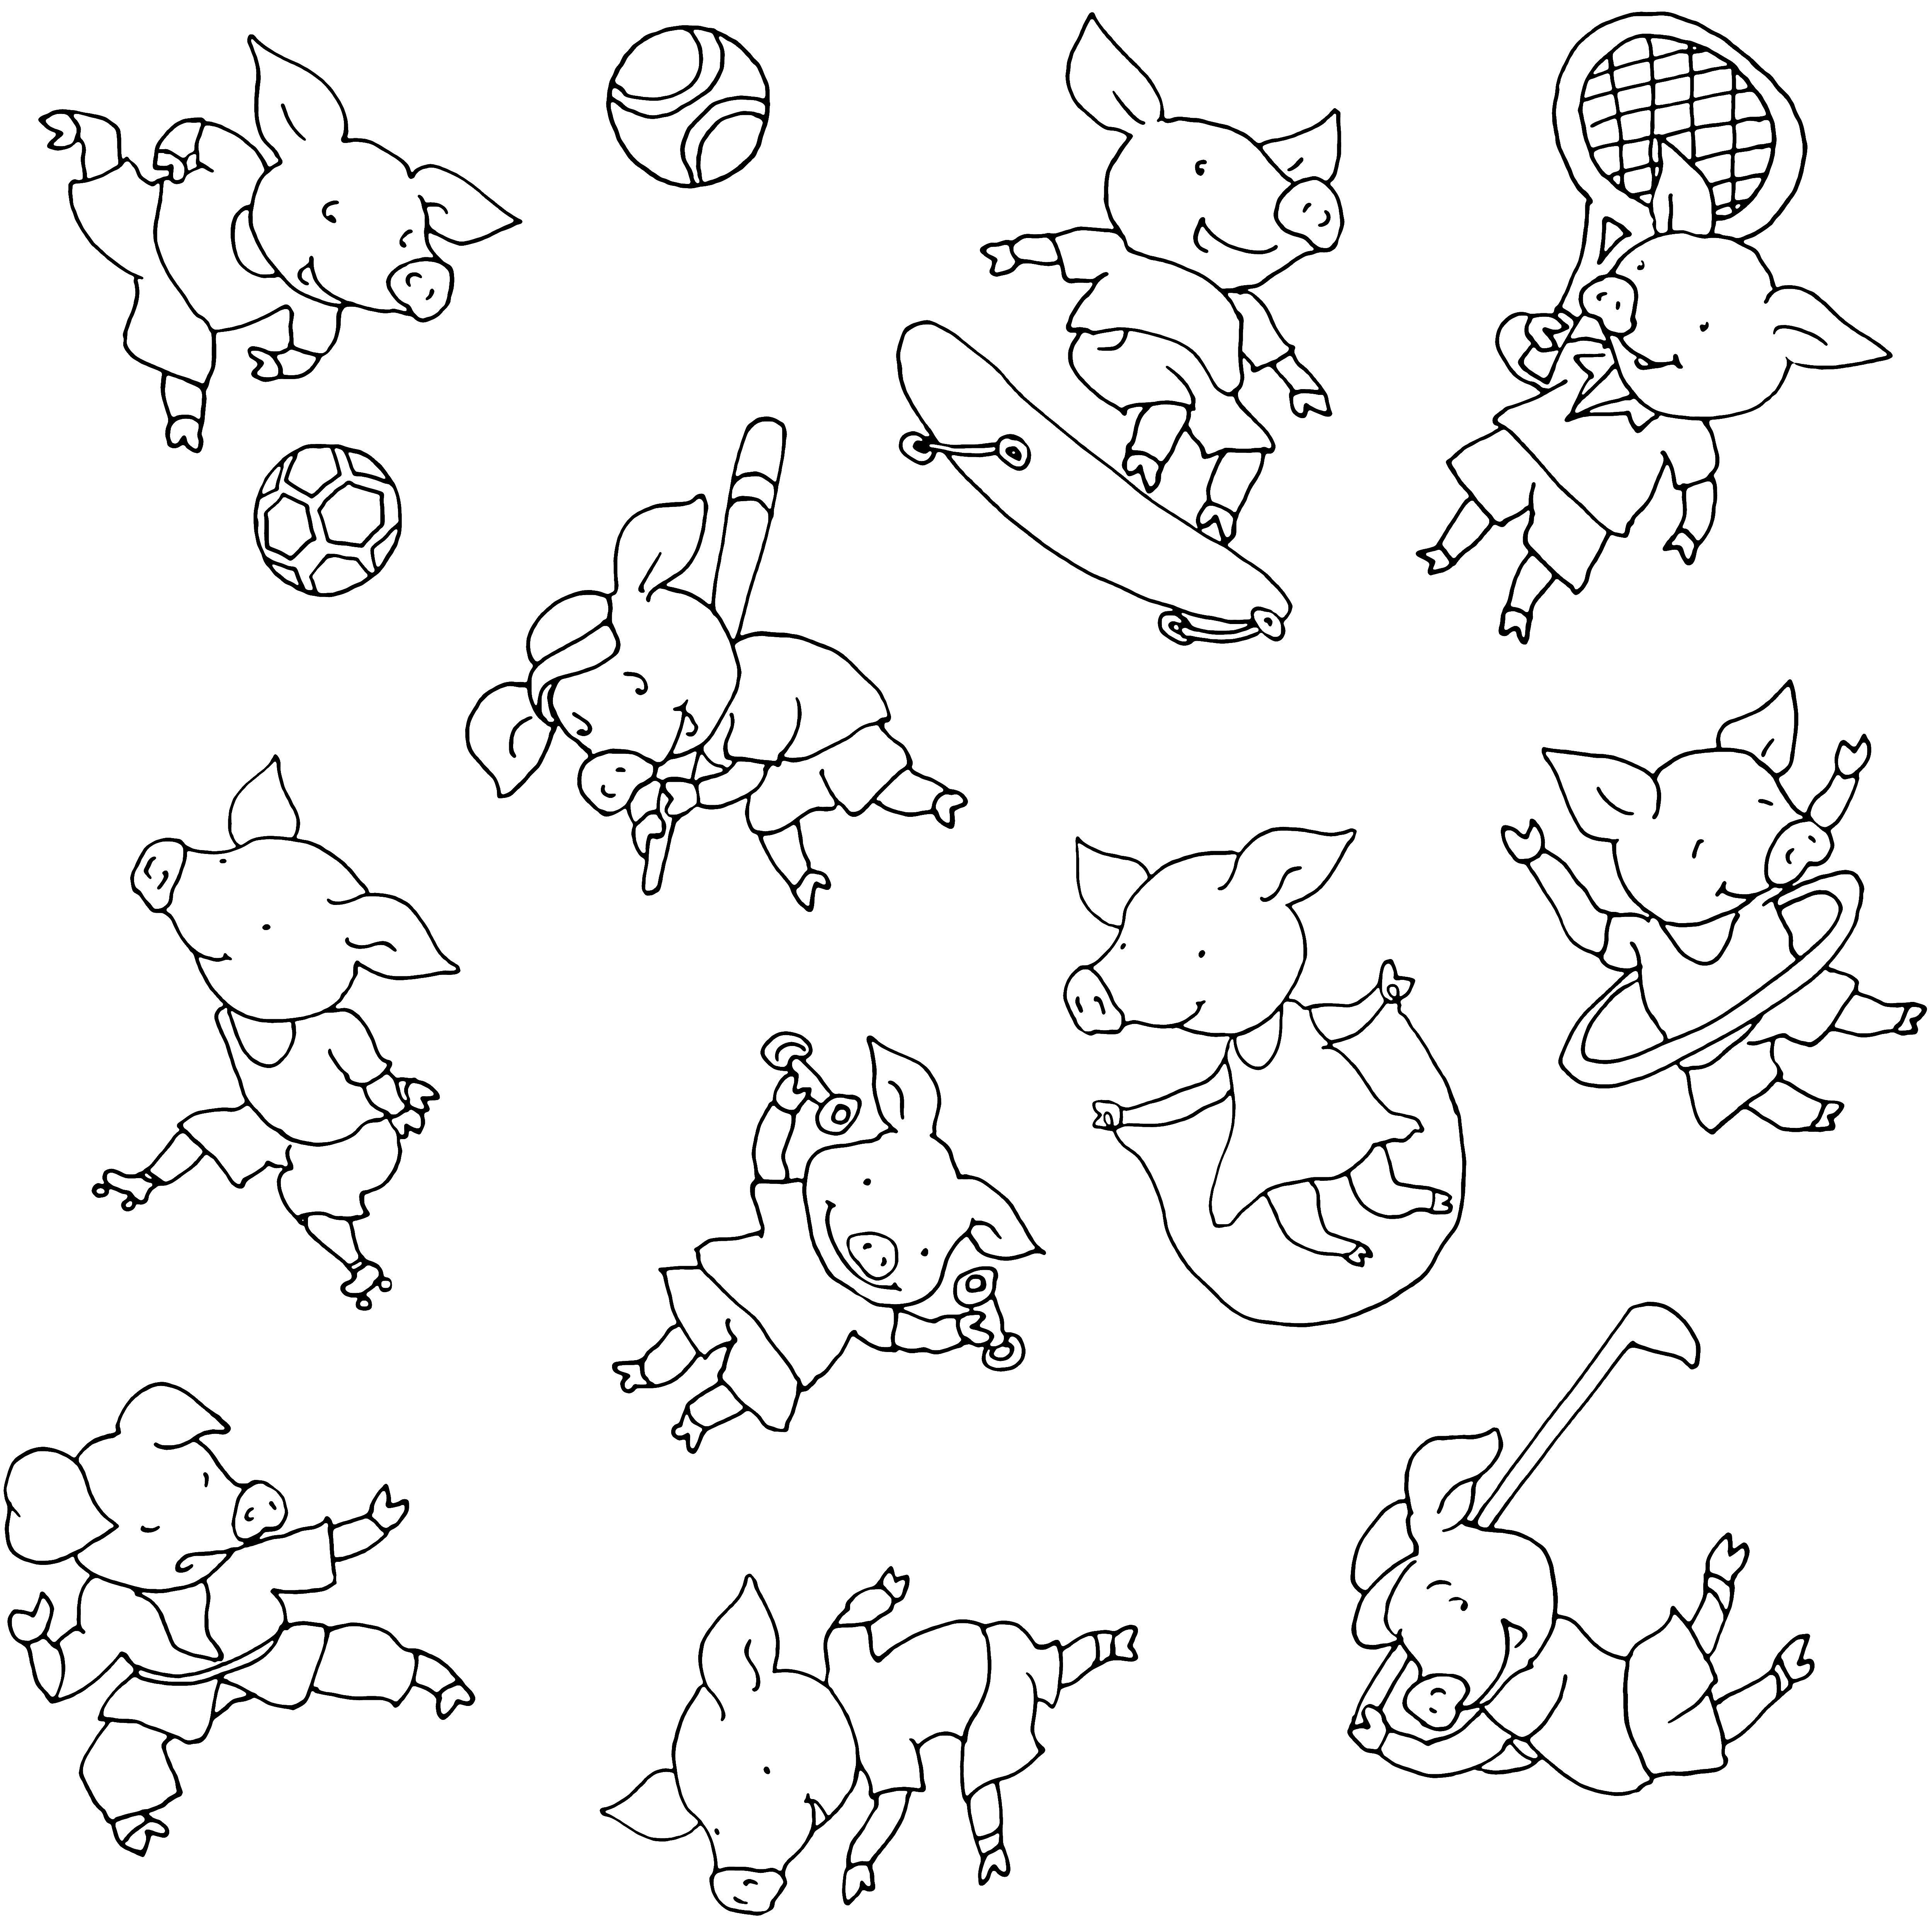 Pig sport pattern